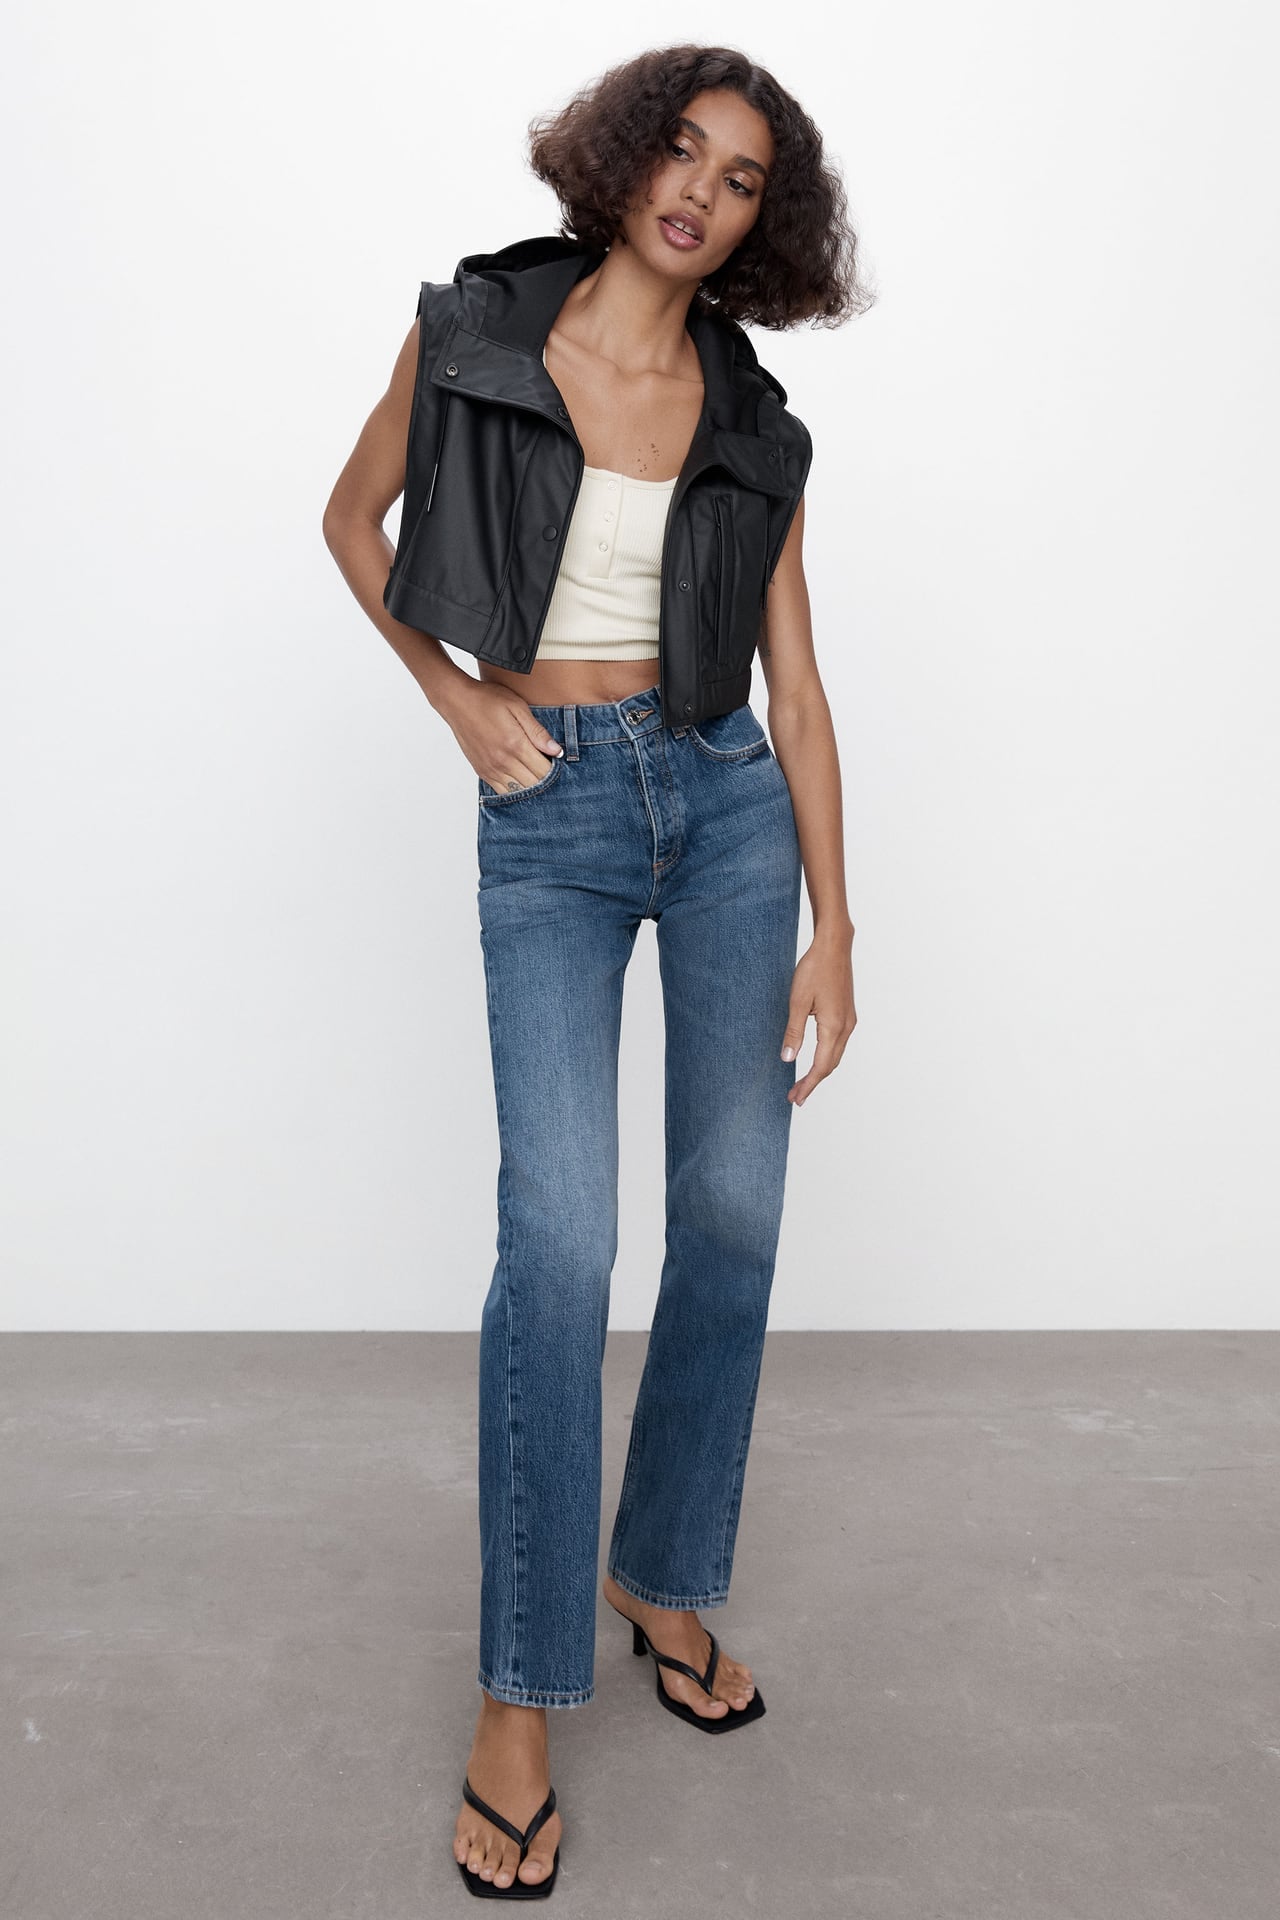 The Best Jeans at Zara POPSUGAR